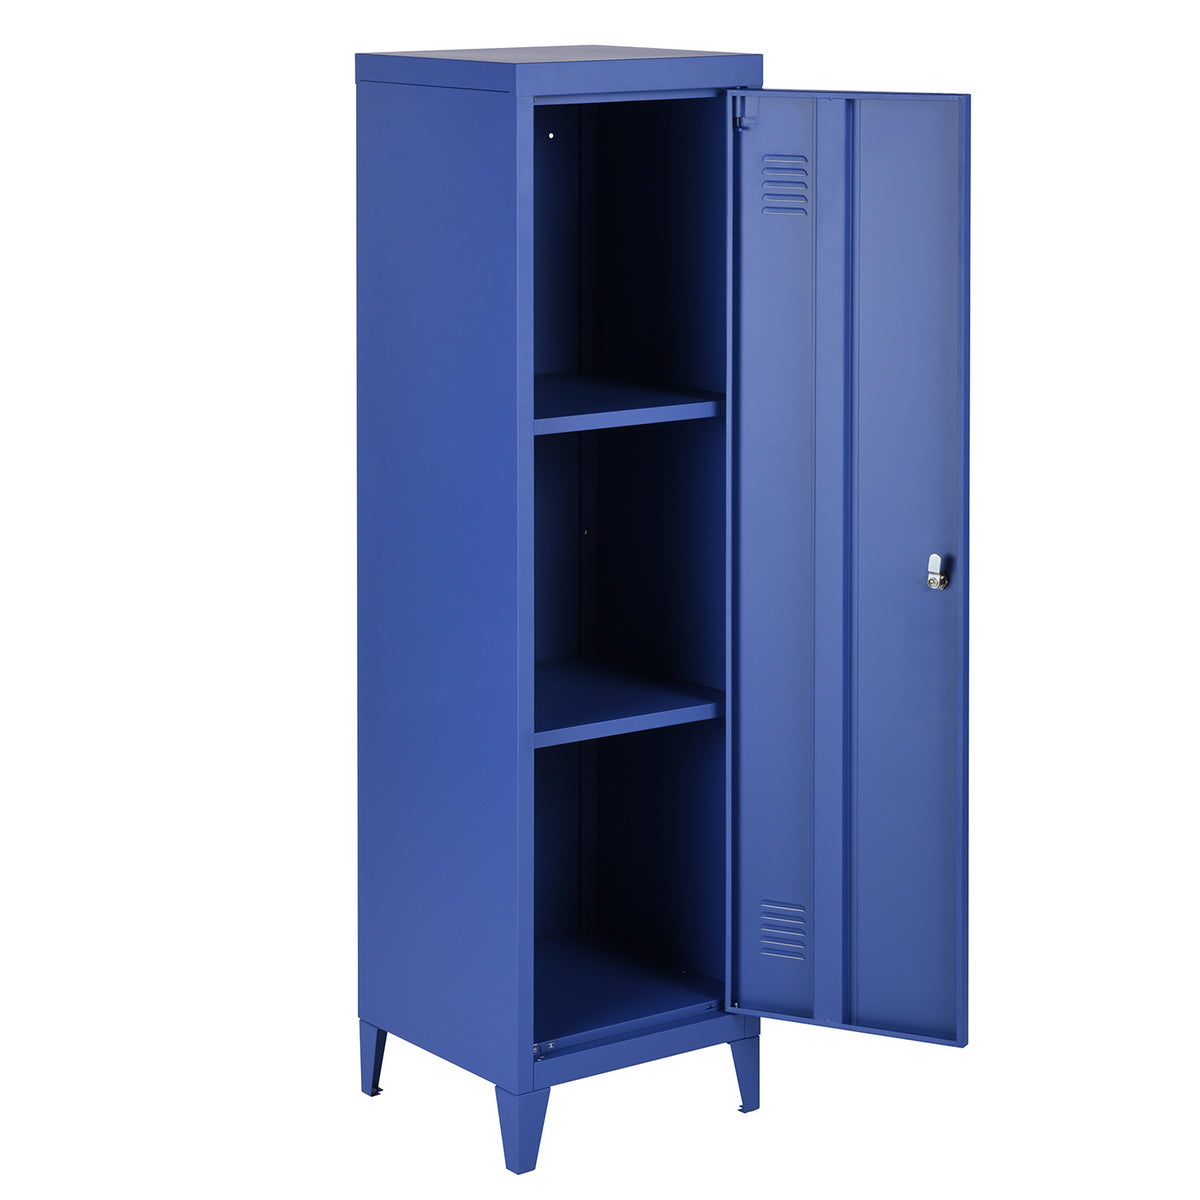 Office metal locker/locker with shelves and lock - COUNCILBLUFFS